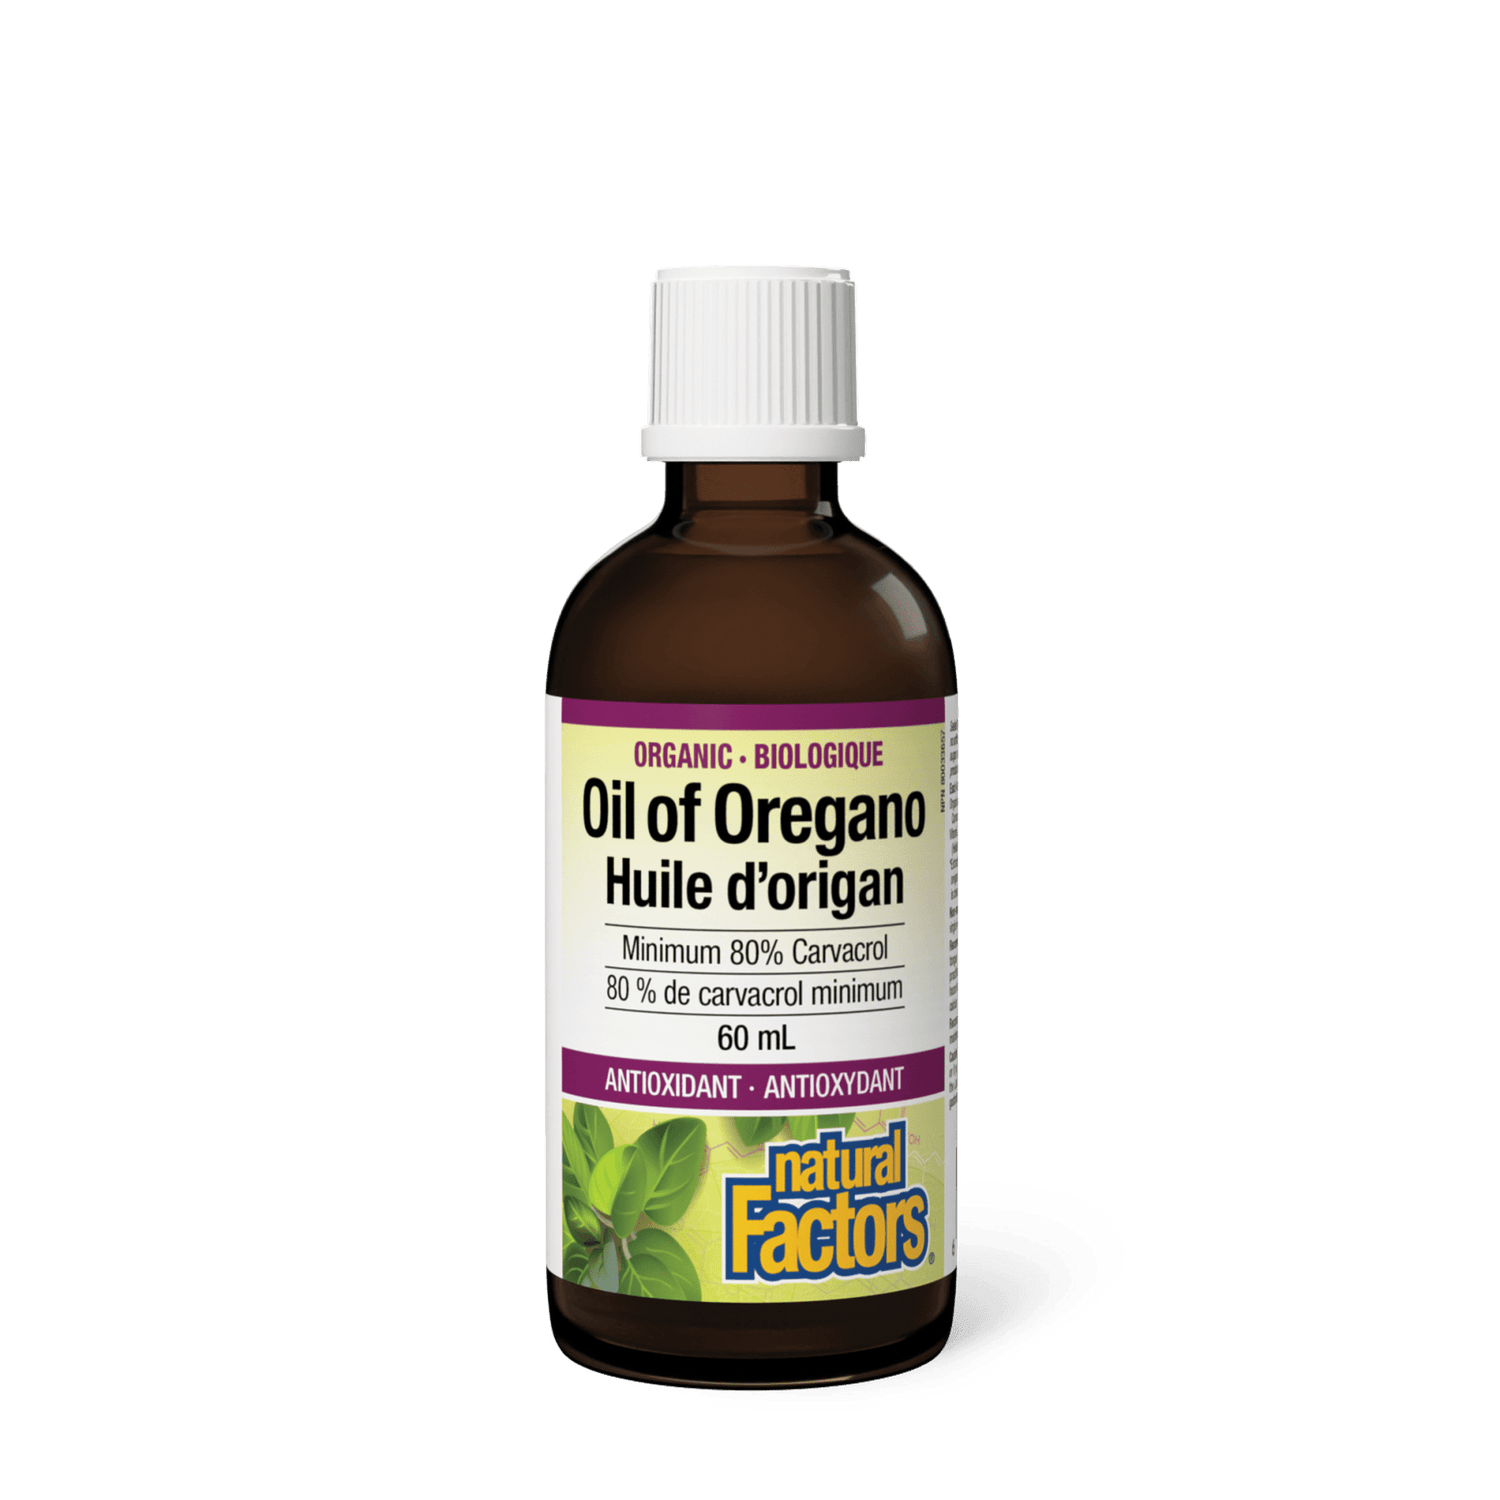 Organic Oil of Oregano, Natural Factors|v|image|4572